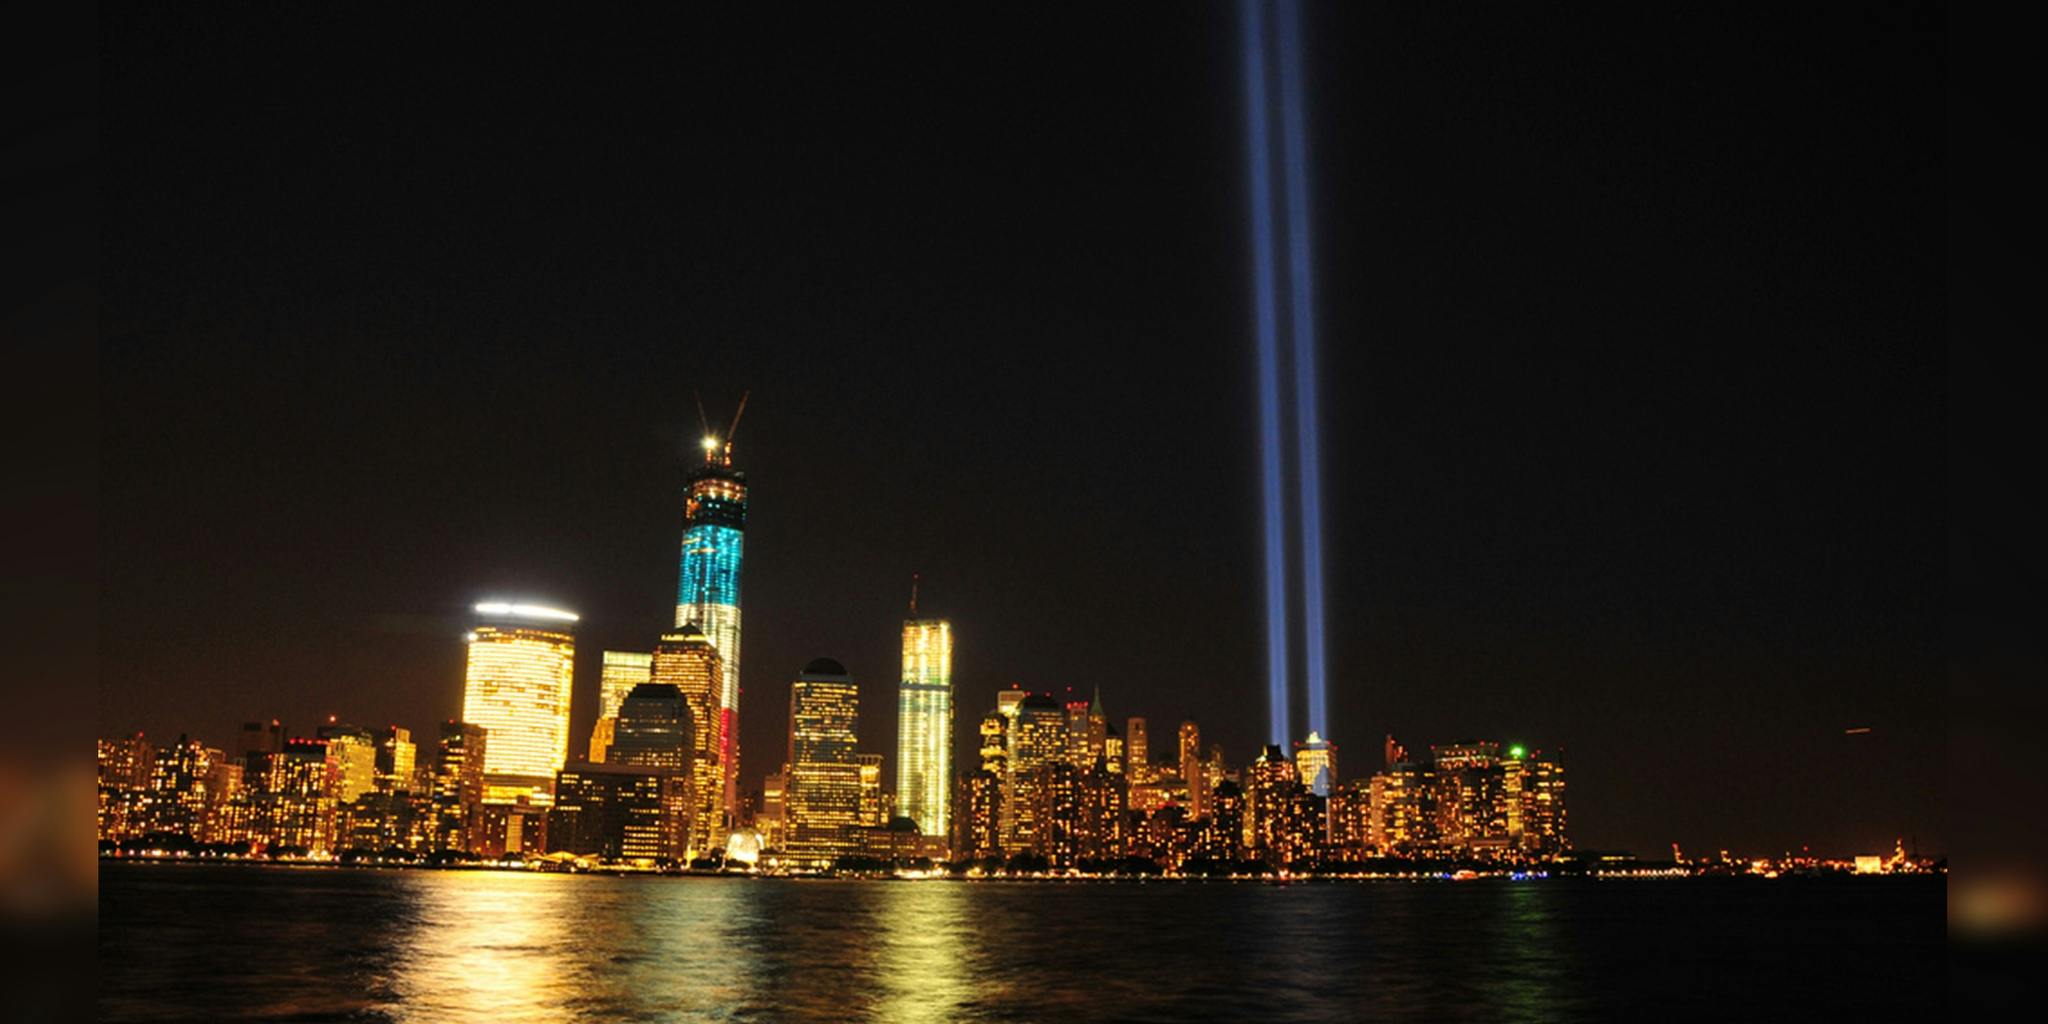 Facebook Promotes 9/11 Conspiracy Article